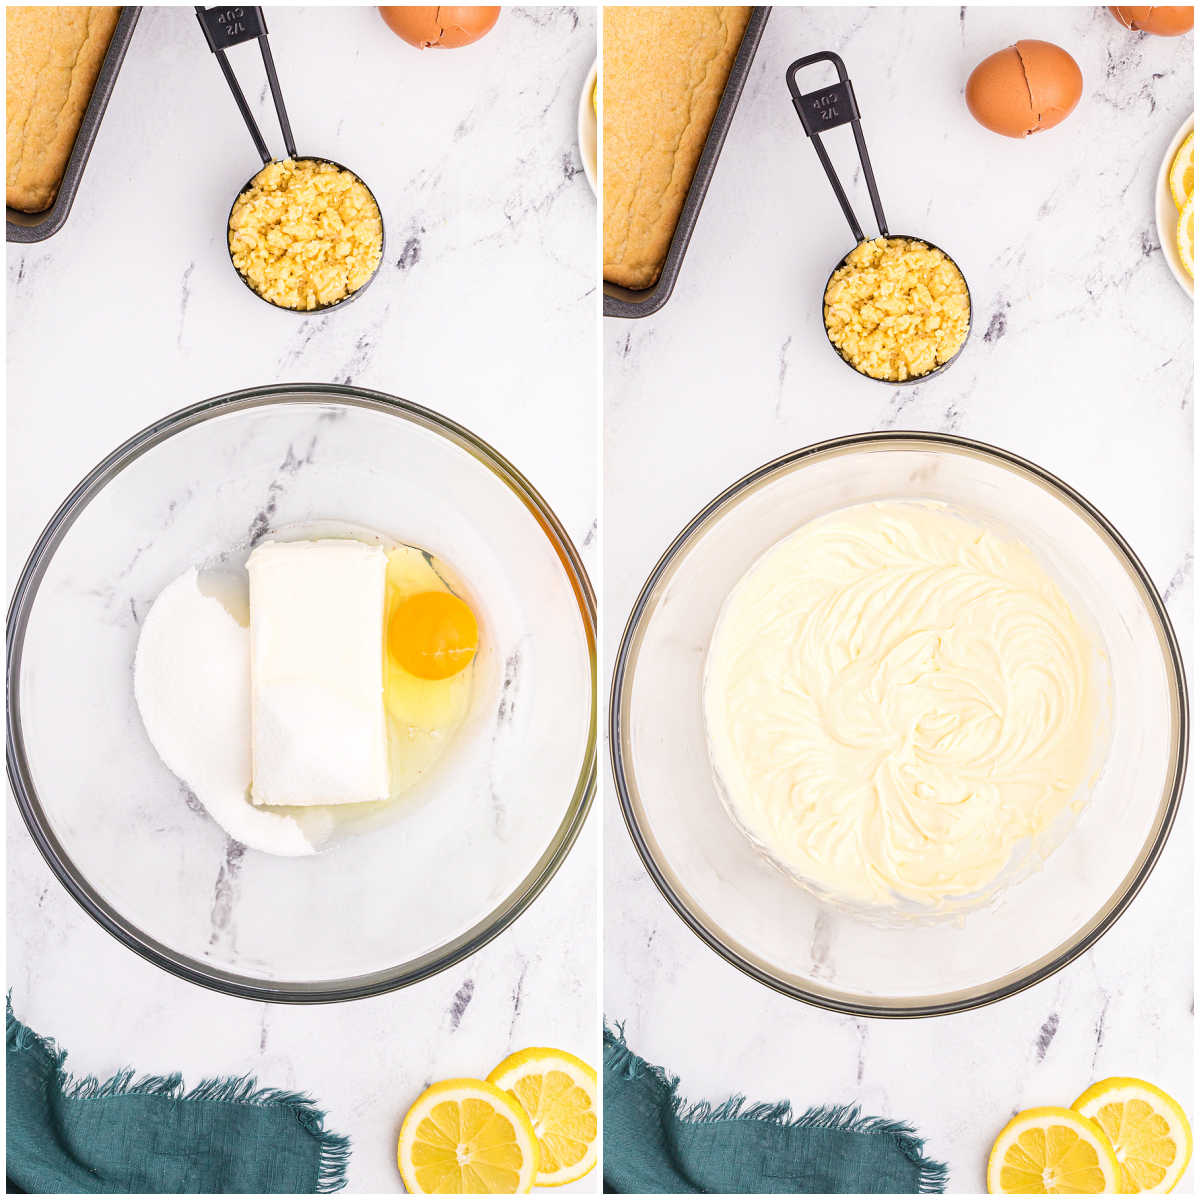 Steps to make lemon cheese bars.